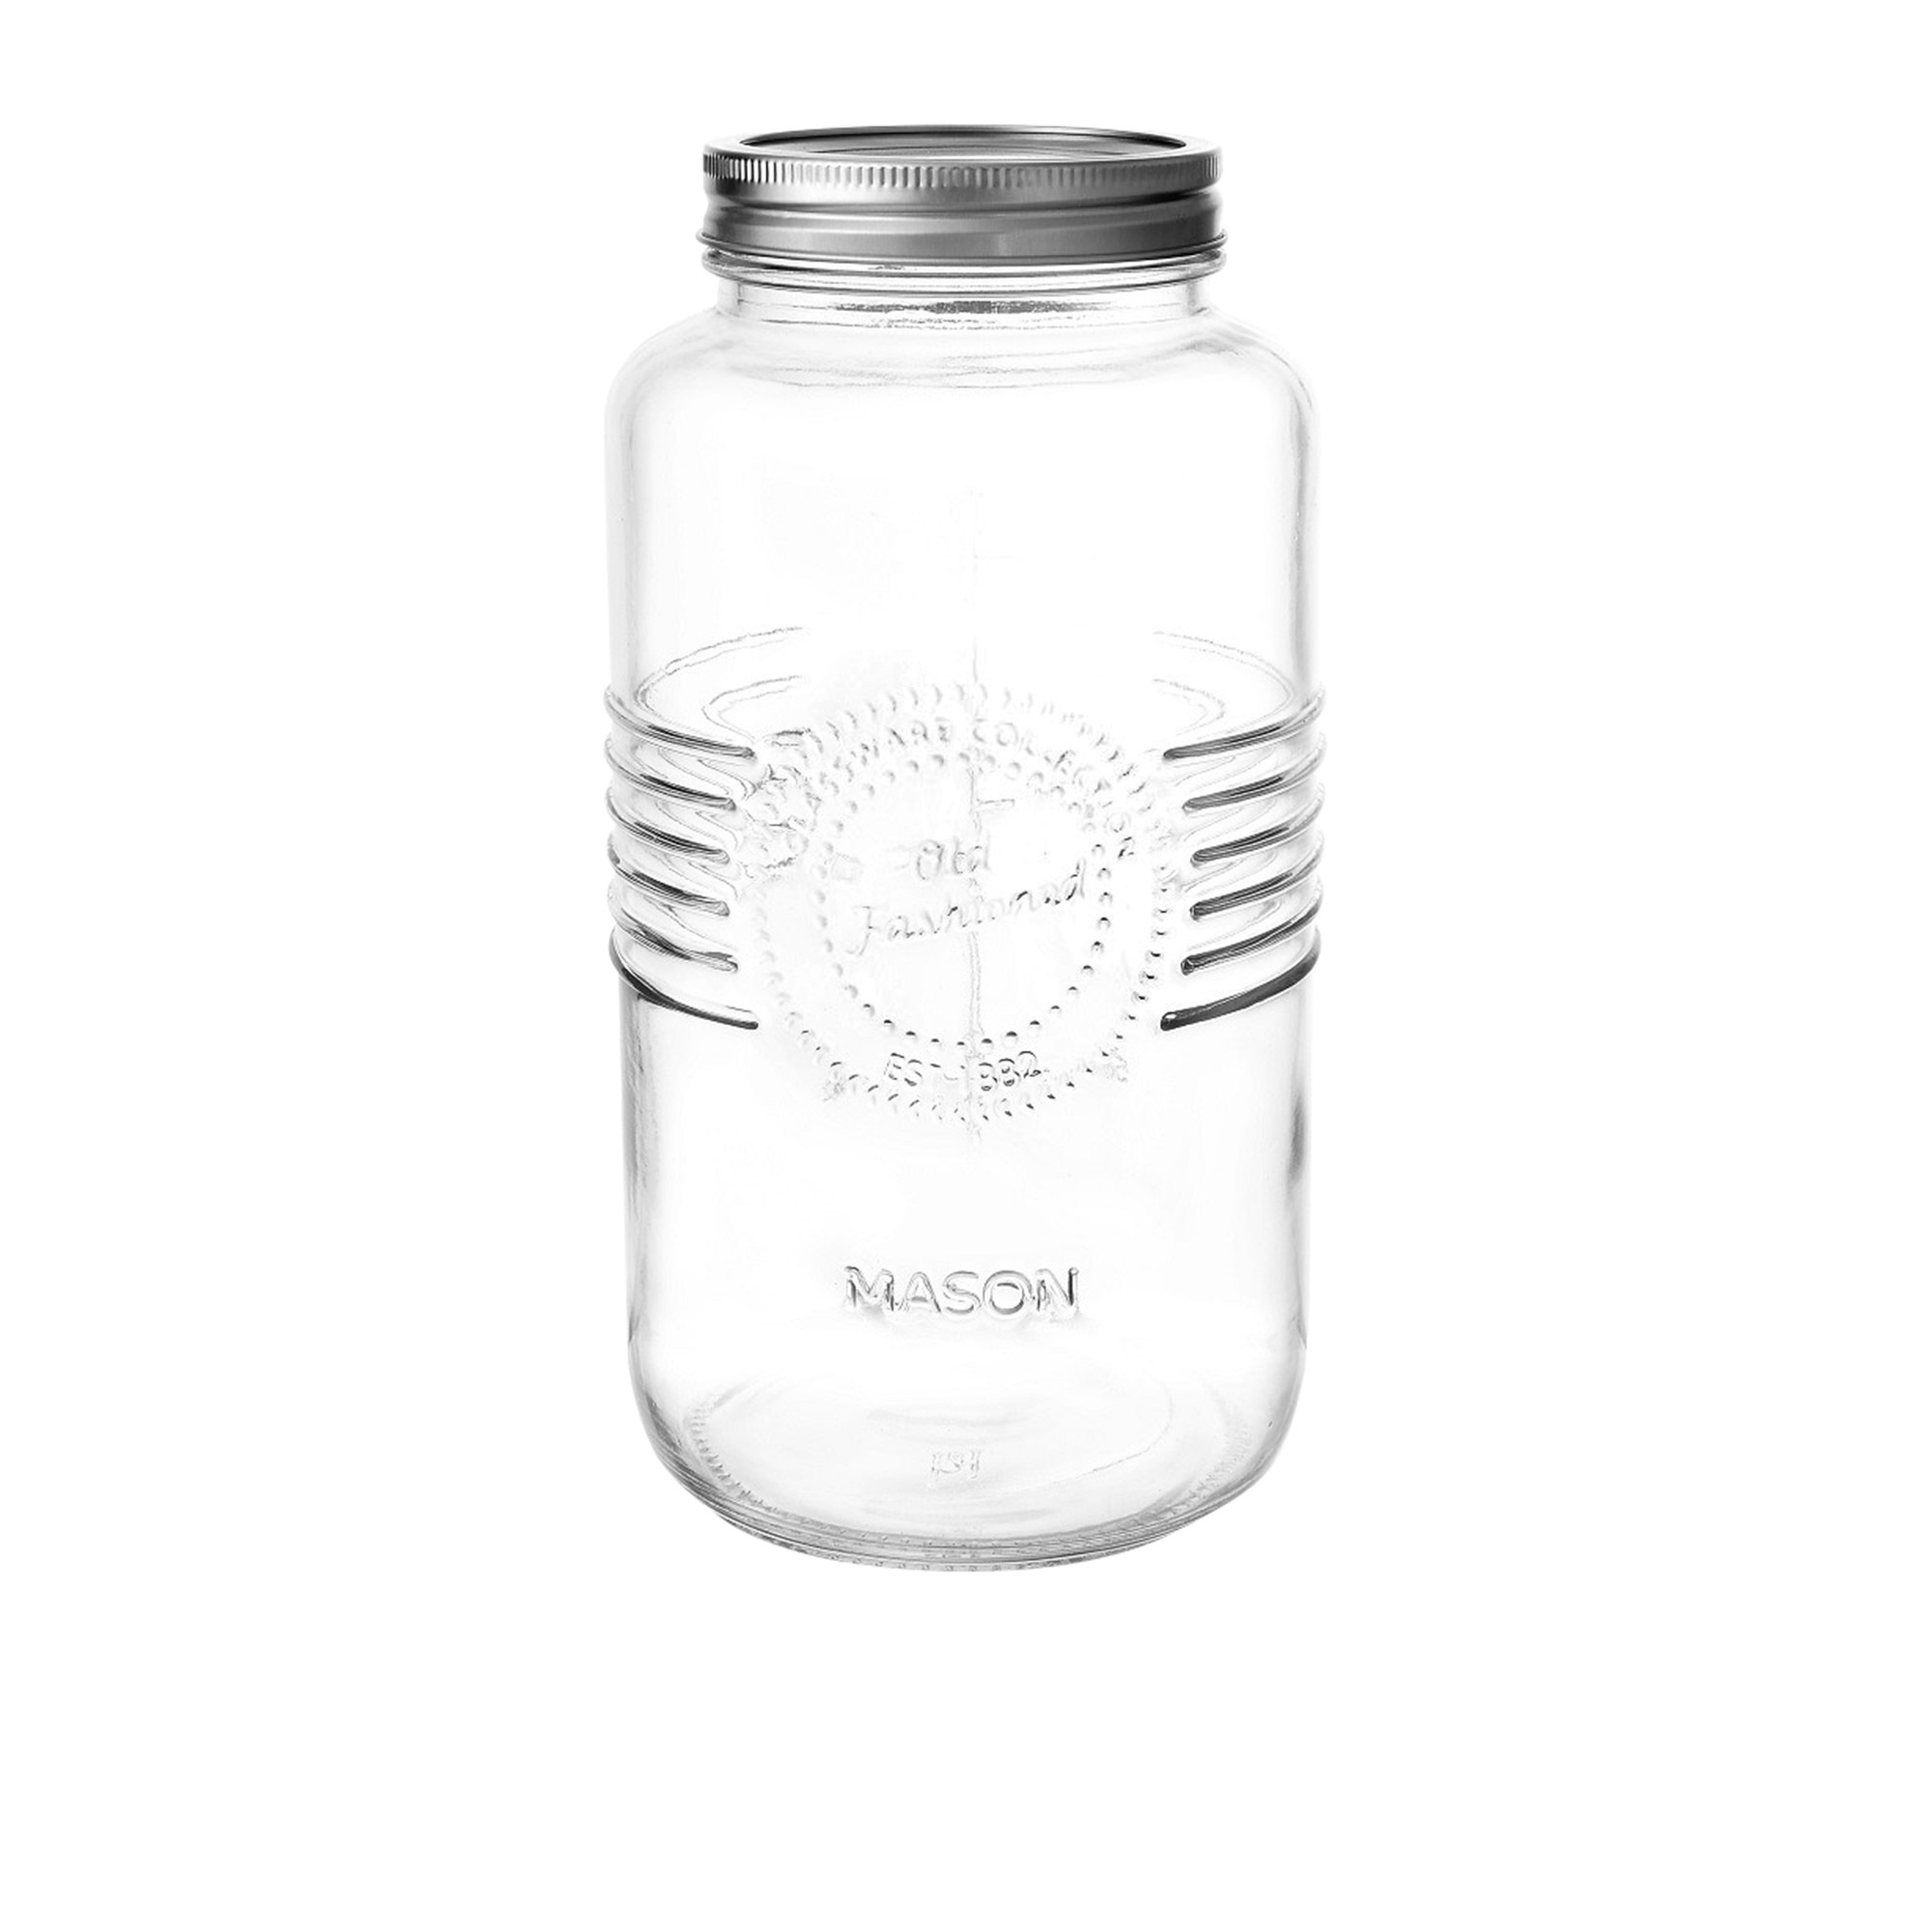 Salisbury & Co Old Fashioned Mason Jar with 2pc Lid 2L Image 1